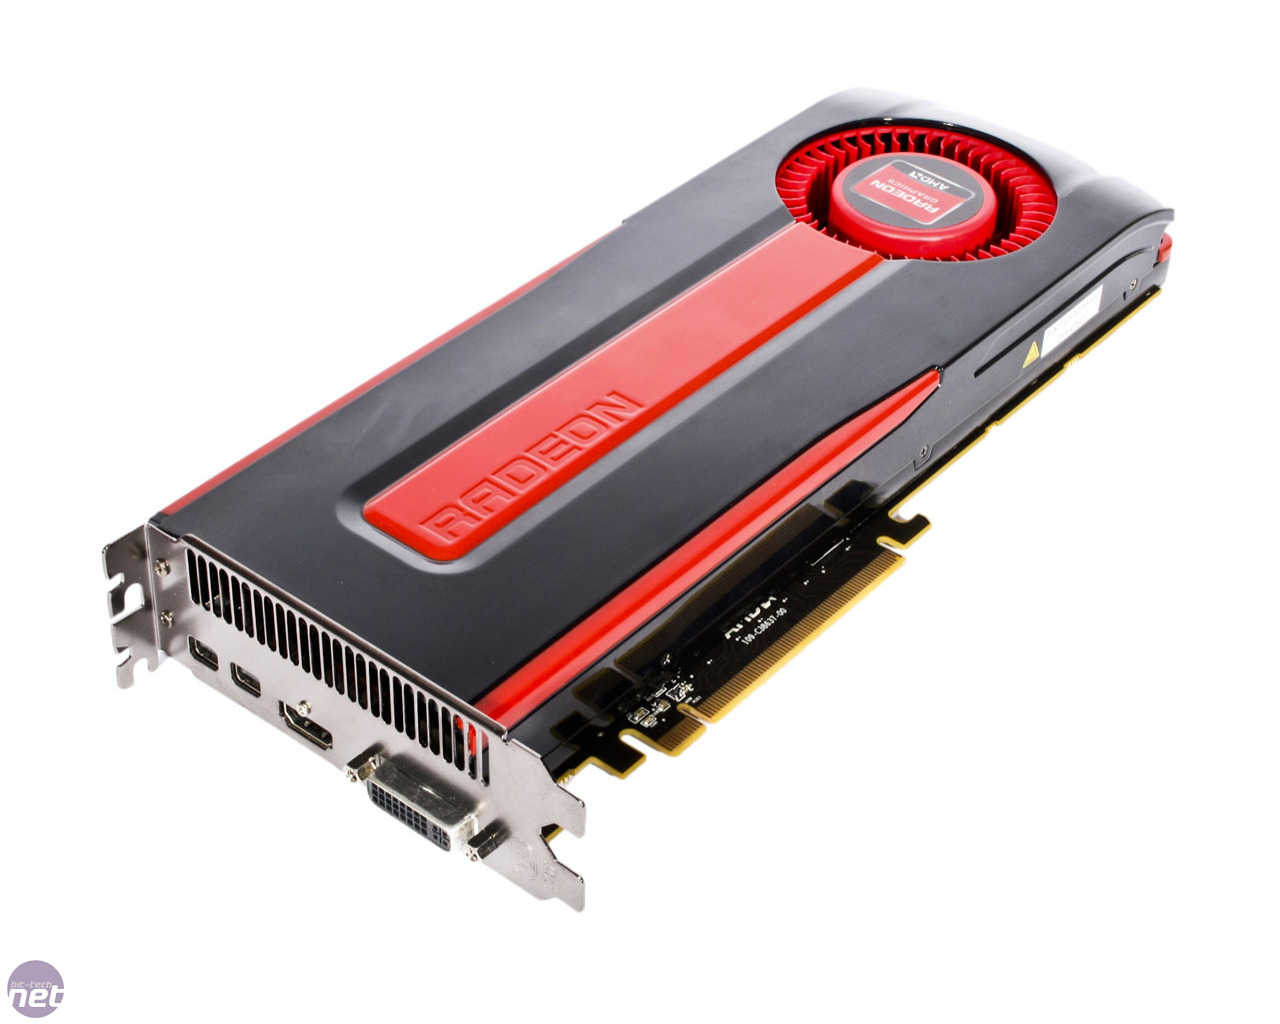 Offense scraper campaign AMD Radeon 7970 3GB GHz Edition Review | bit-tech.net